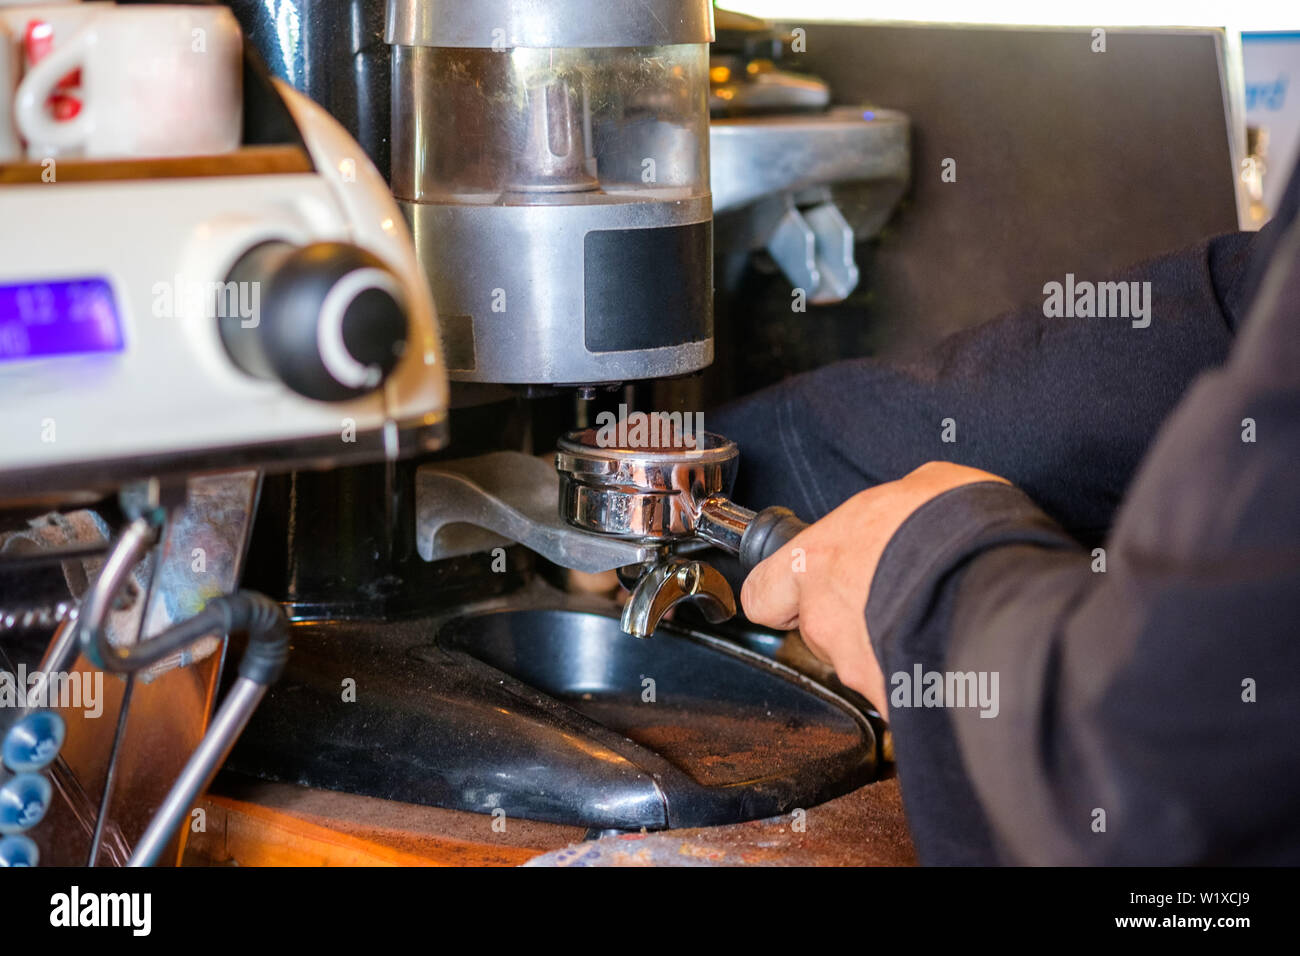 Mann Barista Kaffee mahlen Puder auf Kaffeemaschine Stockfotografie - Alamy